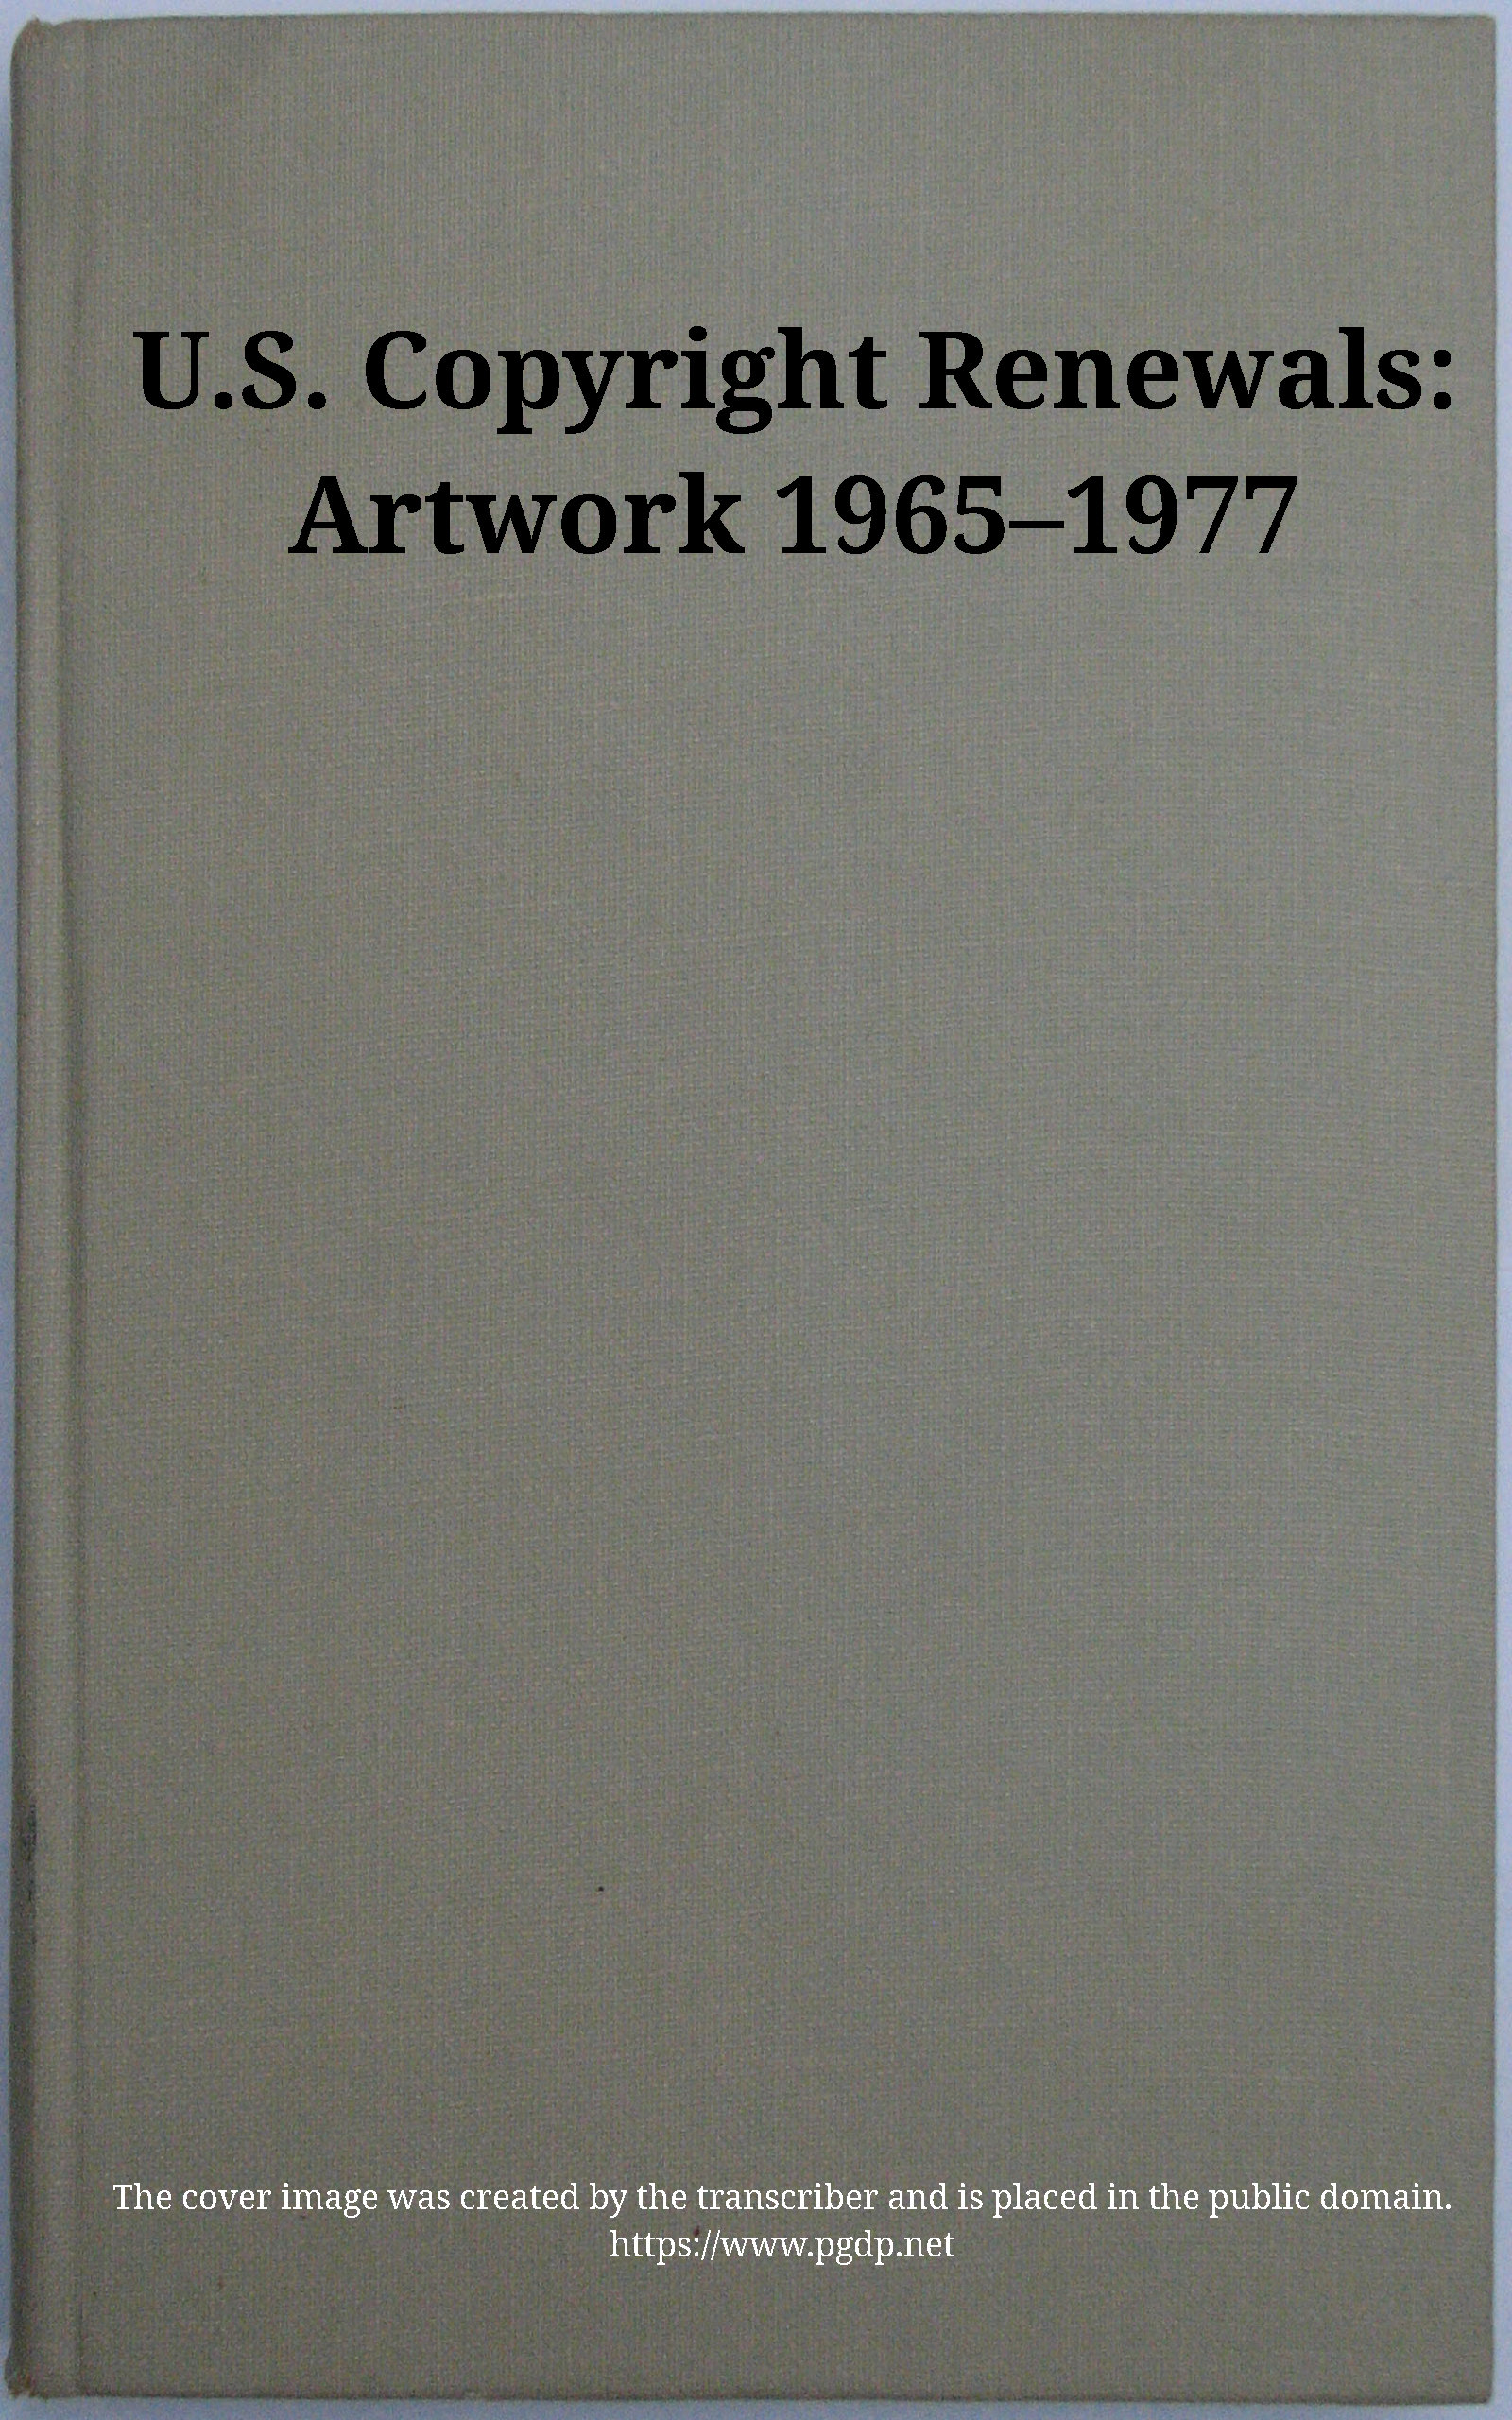 U.S. copyright renewals: artwork 1965-1977